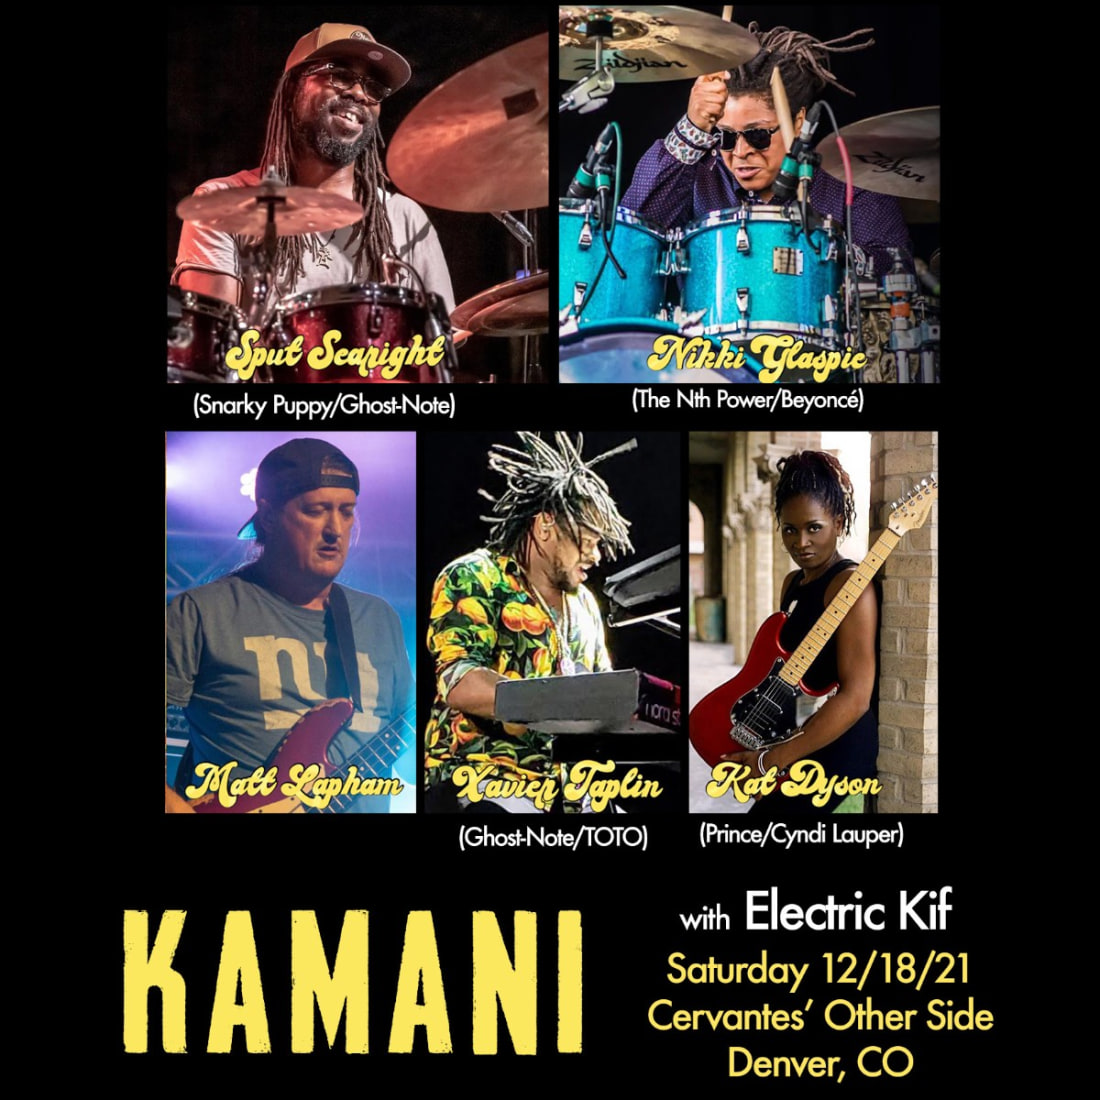 KAMANI ft. Nikki Glaspie (The Nth Power), Sput Searight (Snarky Puppy), Xavier Taplin, Kat Dyson, Matt Lapham w/ Electric Kif